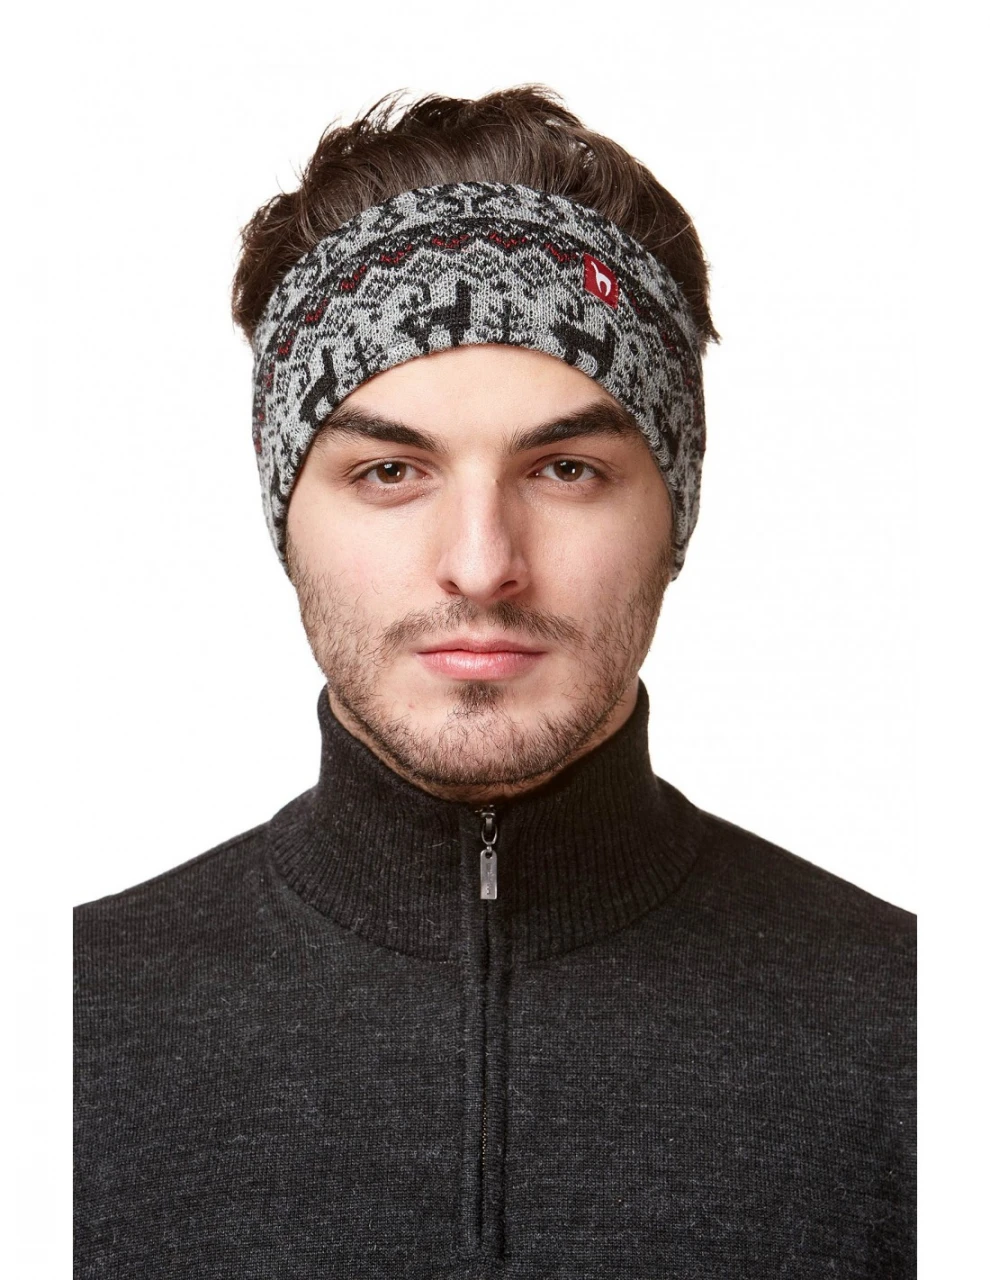 ANDEN VIENTOS unisex headband in cotton-lined Alpaca wool_86303